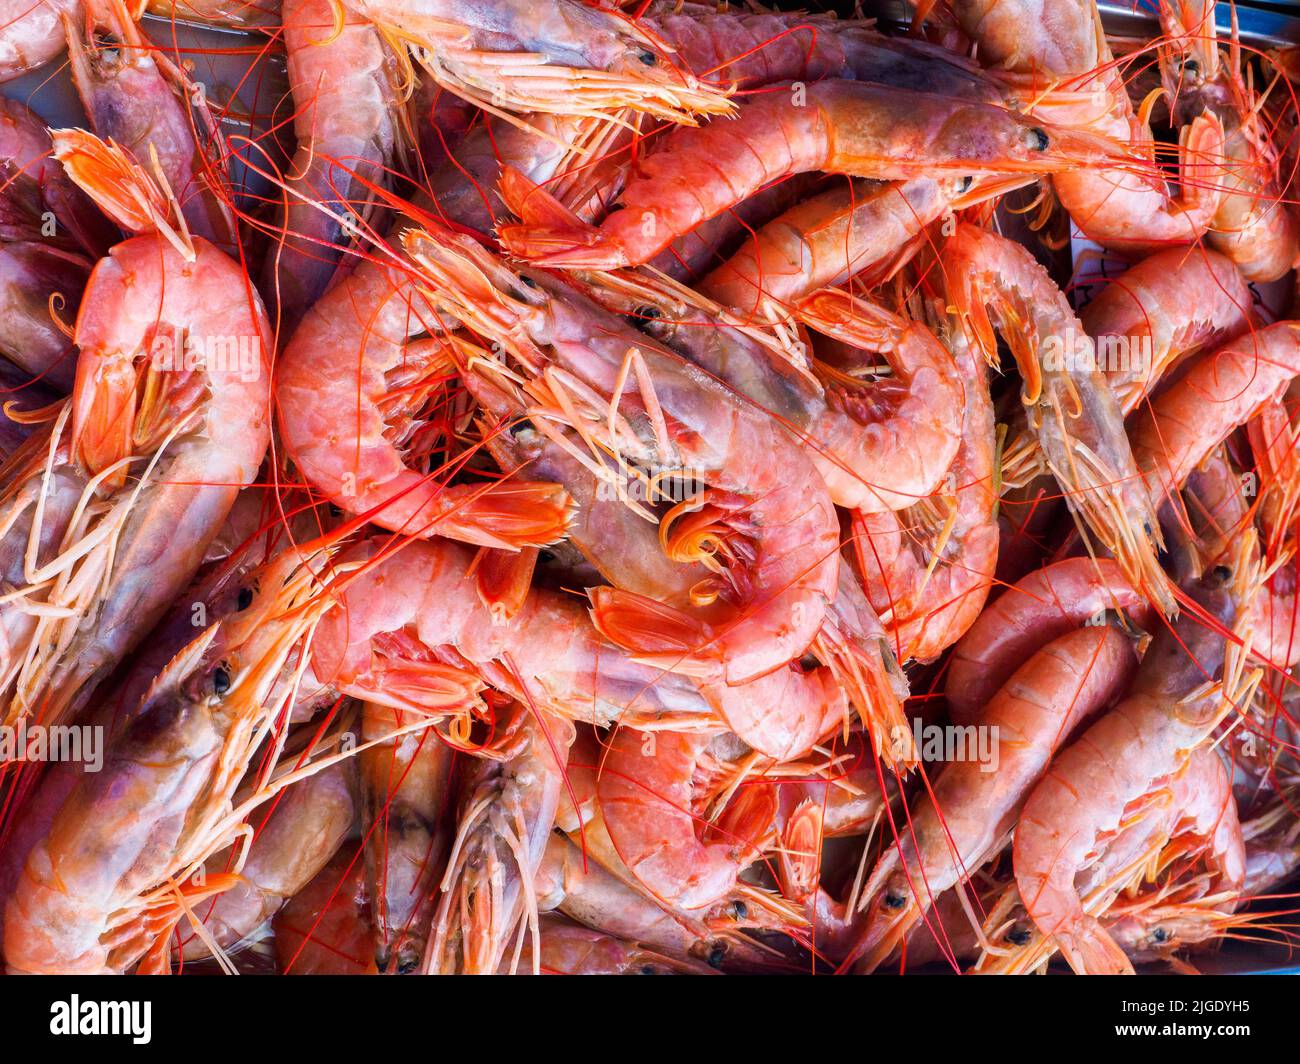 Shrimps for sale in the market of Marsaxlokk - Malta Stock Photo